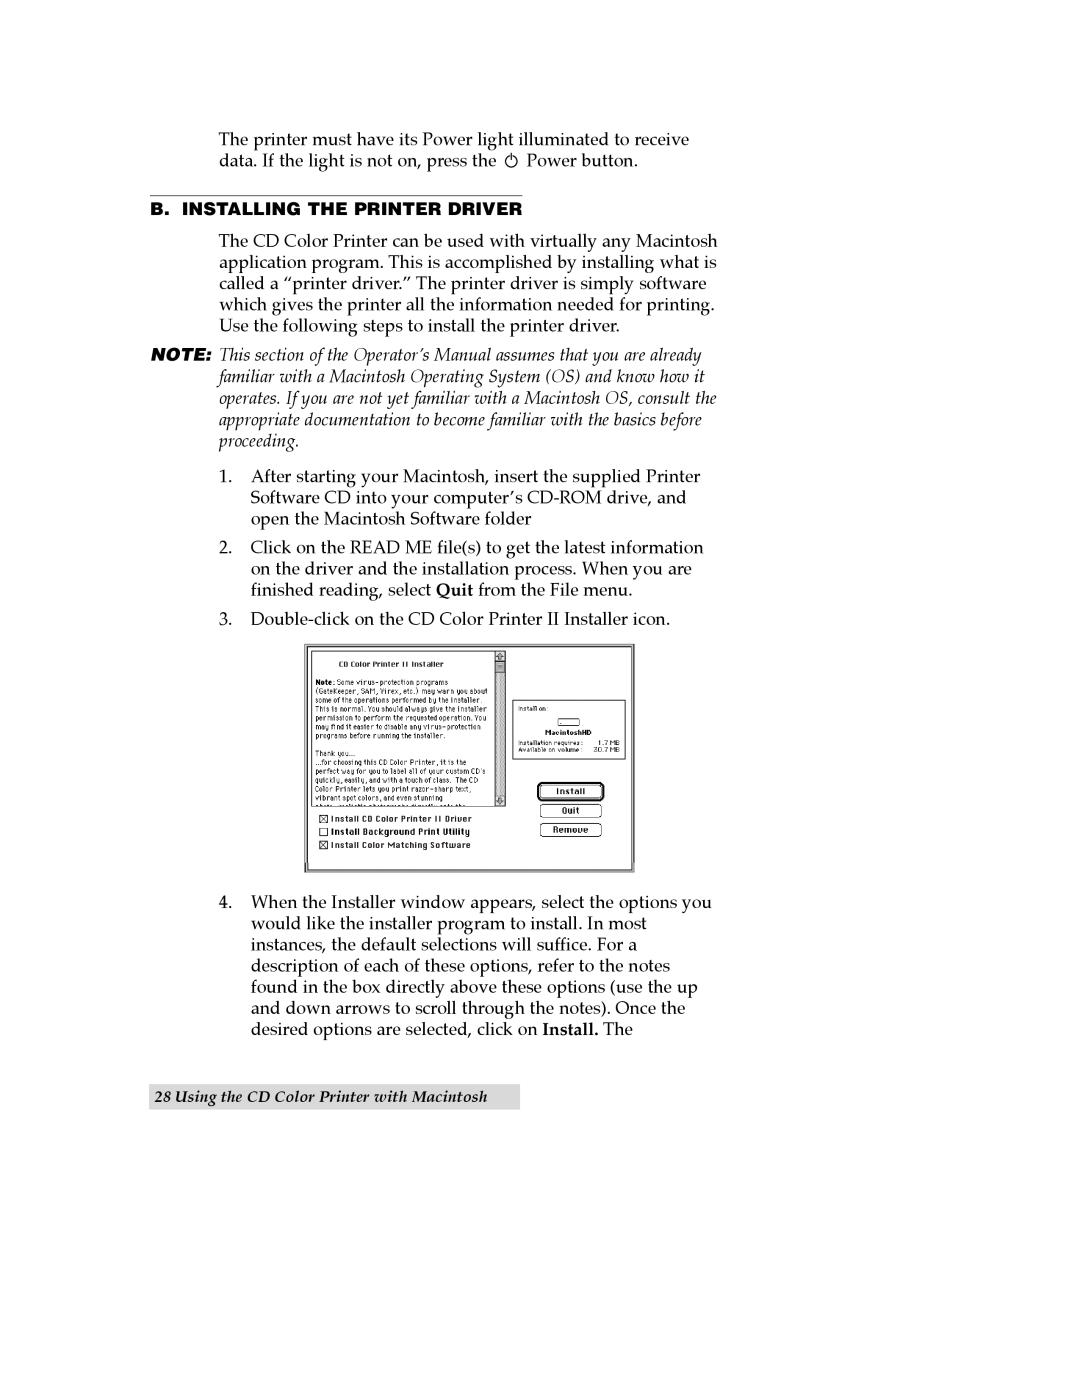 Primera Technology CD Color Printer II manual B. Installing The Printer Driver, Using the CD Color Printer with Macintosh 